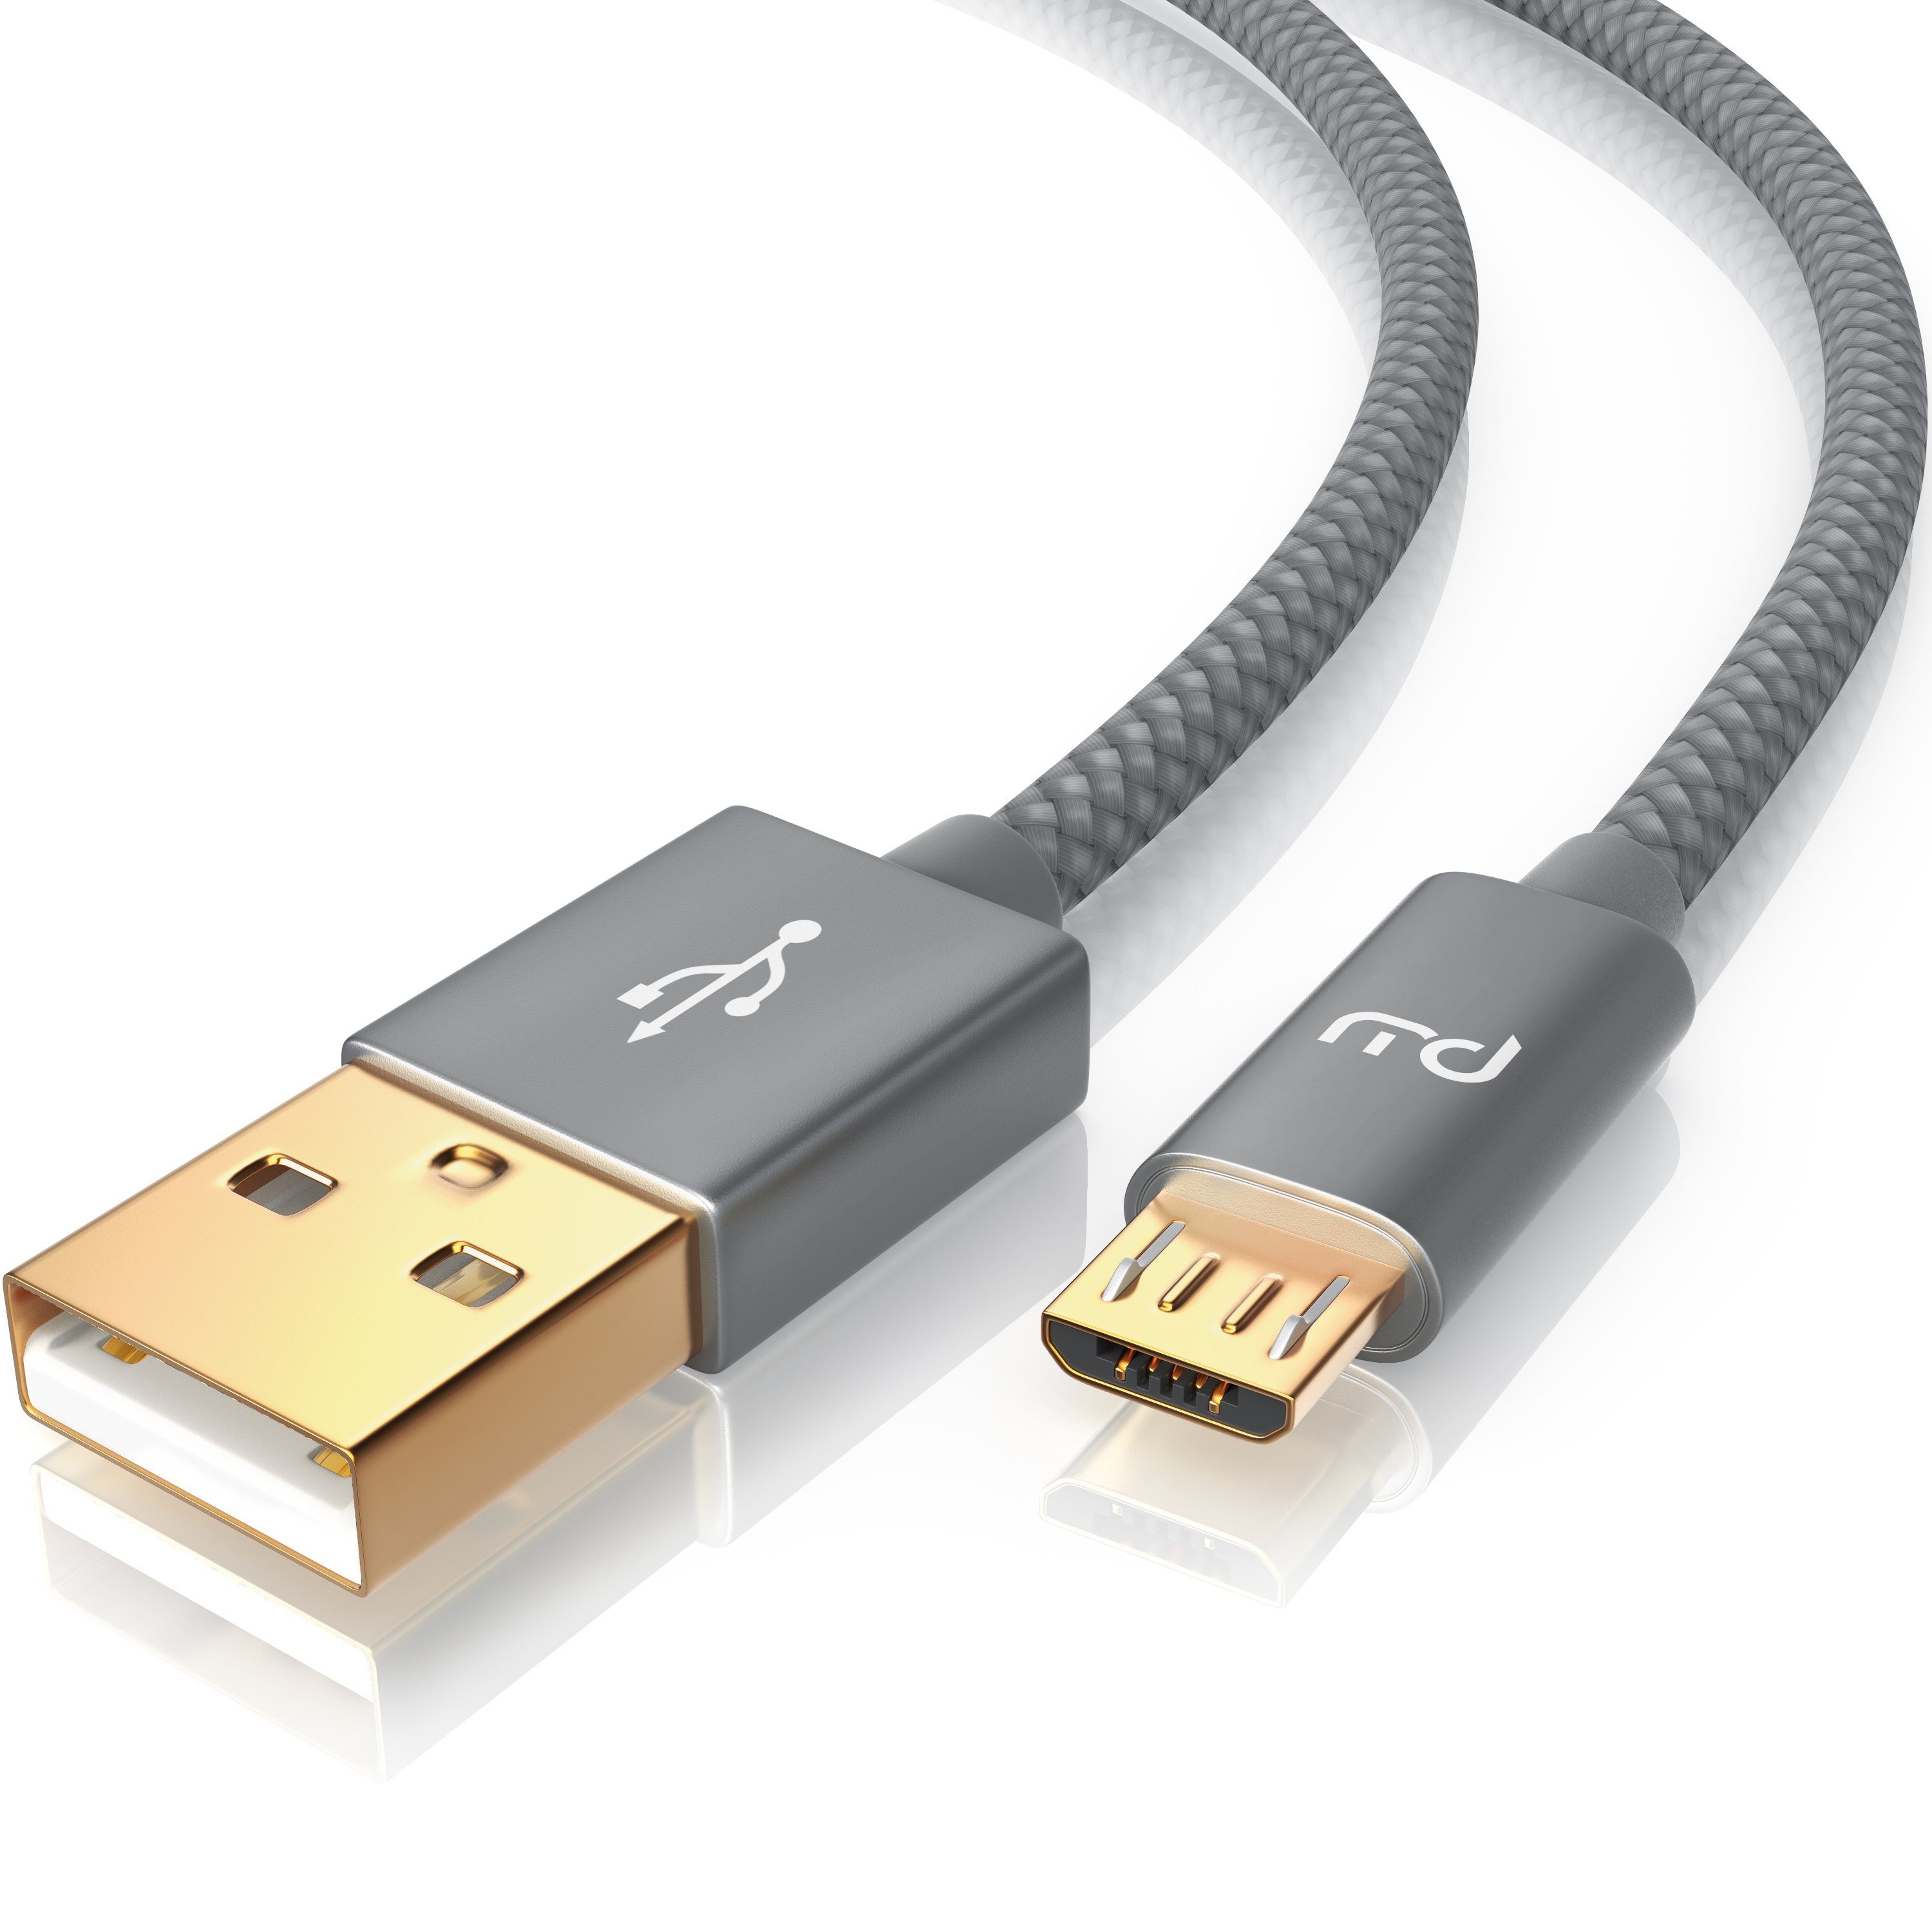 Primewire USB-Kabel, 2.0, Micro-USB (200 cm), 2,4A MicroUSB  Schnellladekabel, Nylon, Metallstecker, Datenkabel - 2m